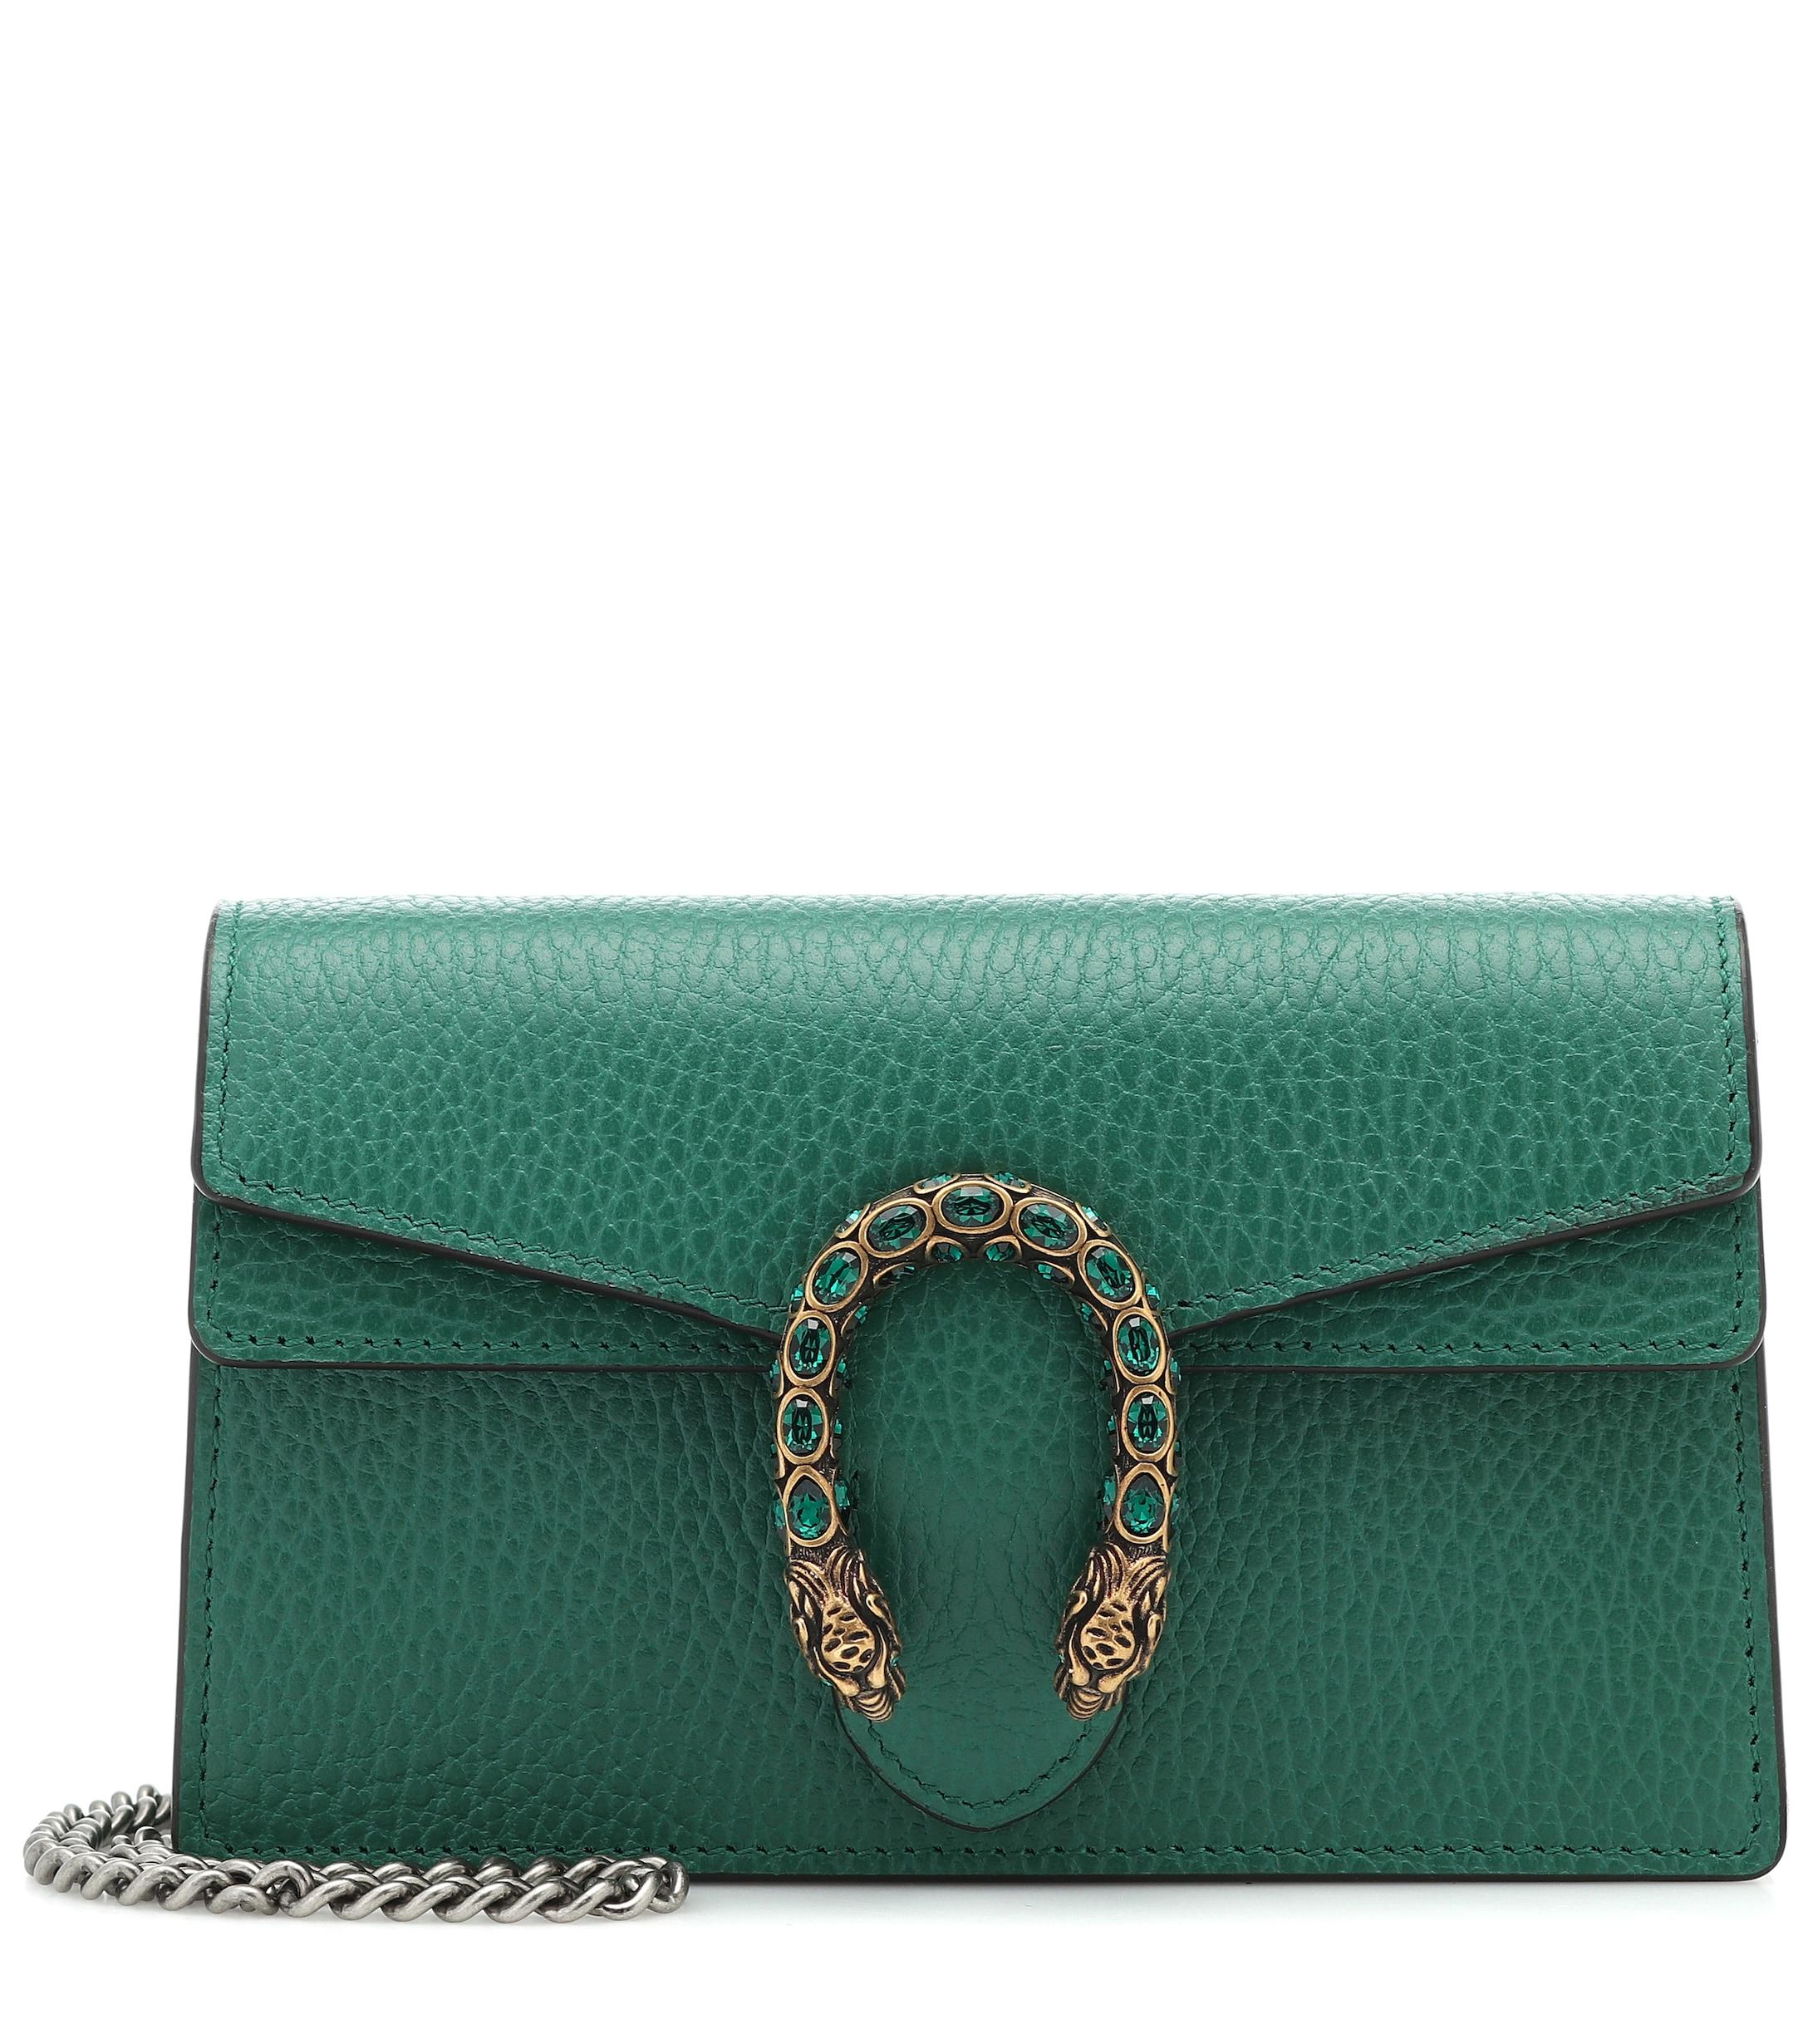 Gucci Dionysus Leather Super Mini Bag in Green - Save 34% - Lyst